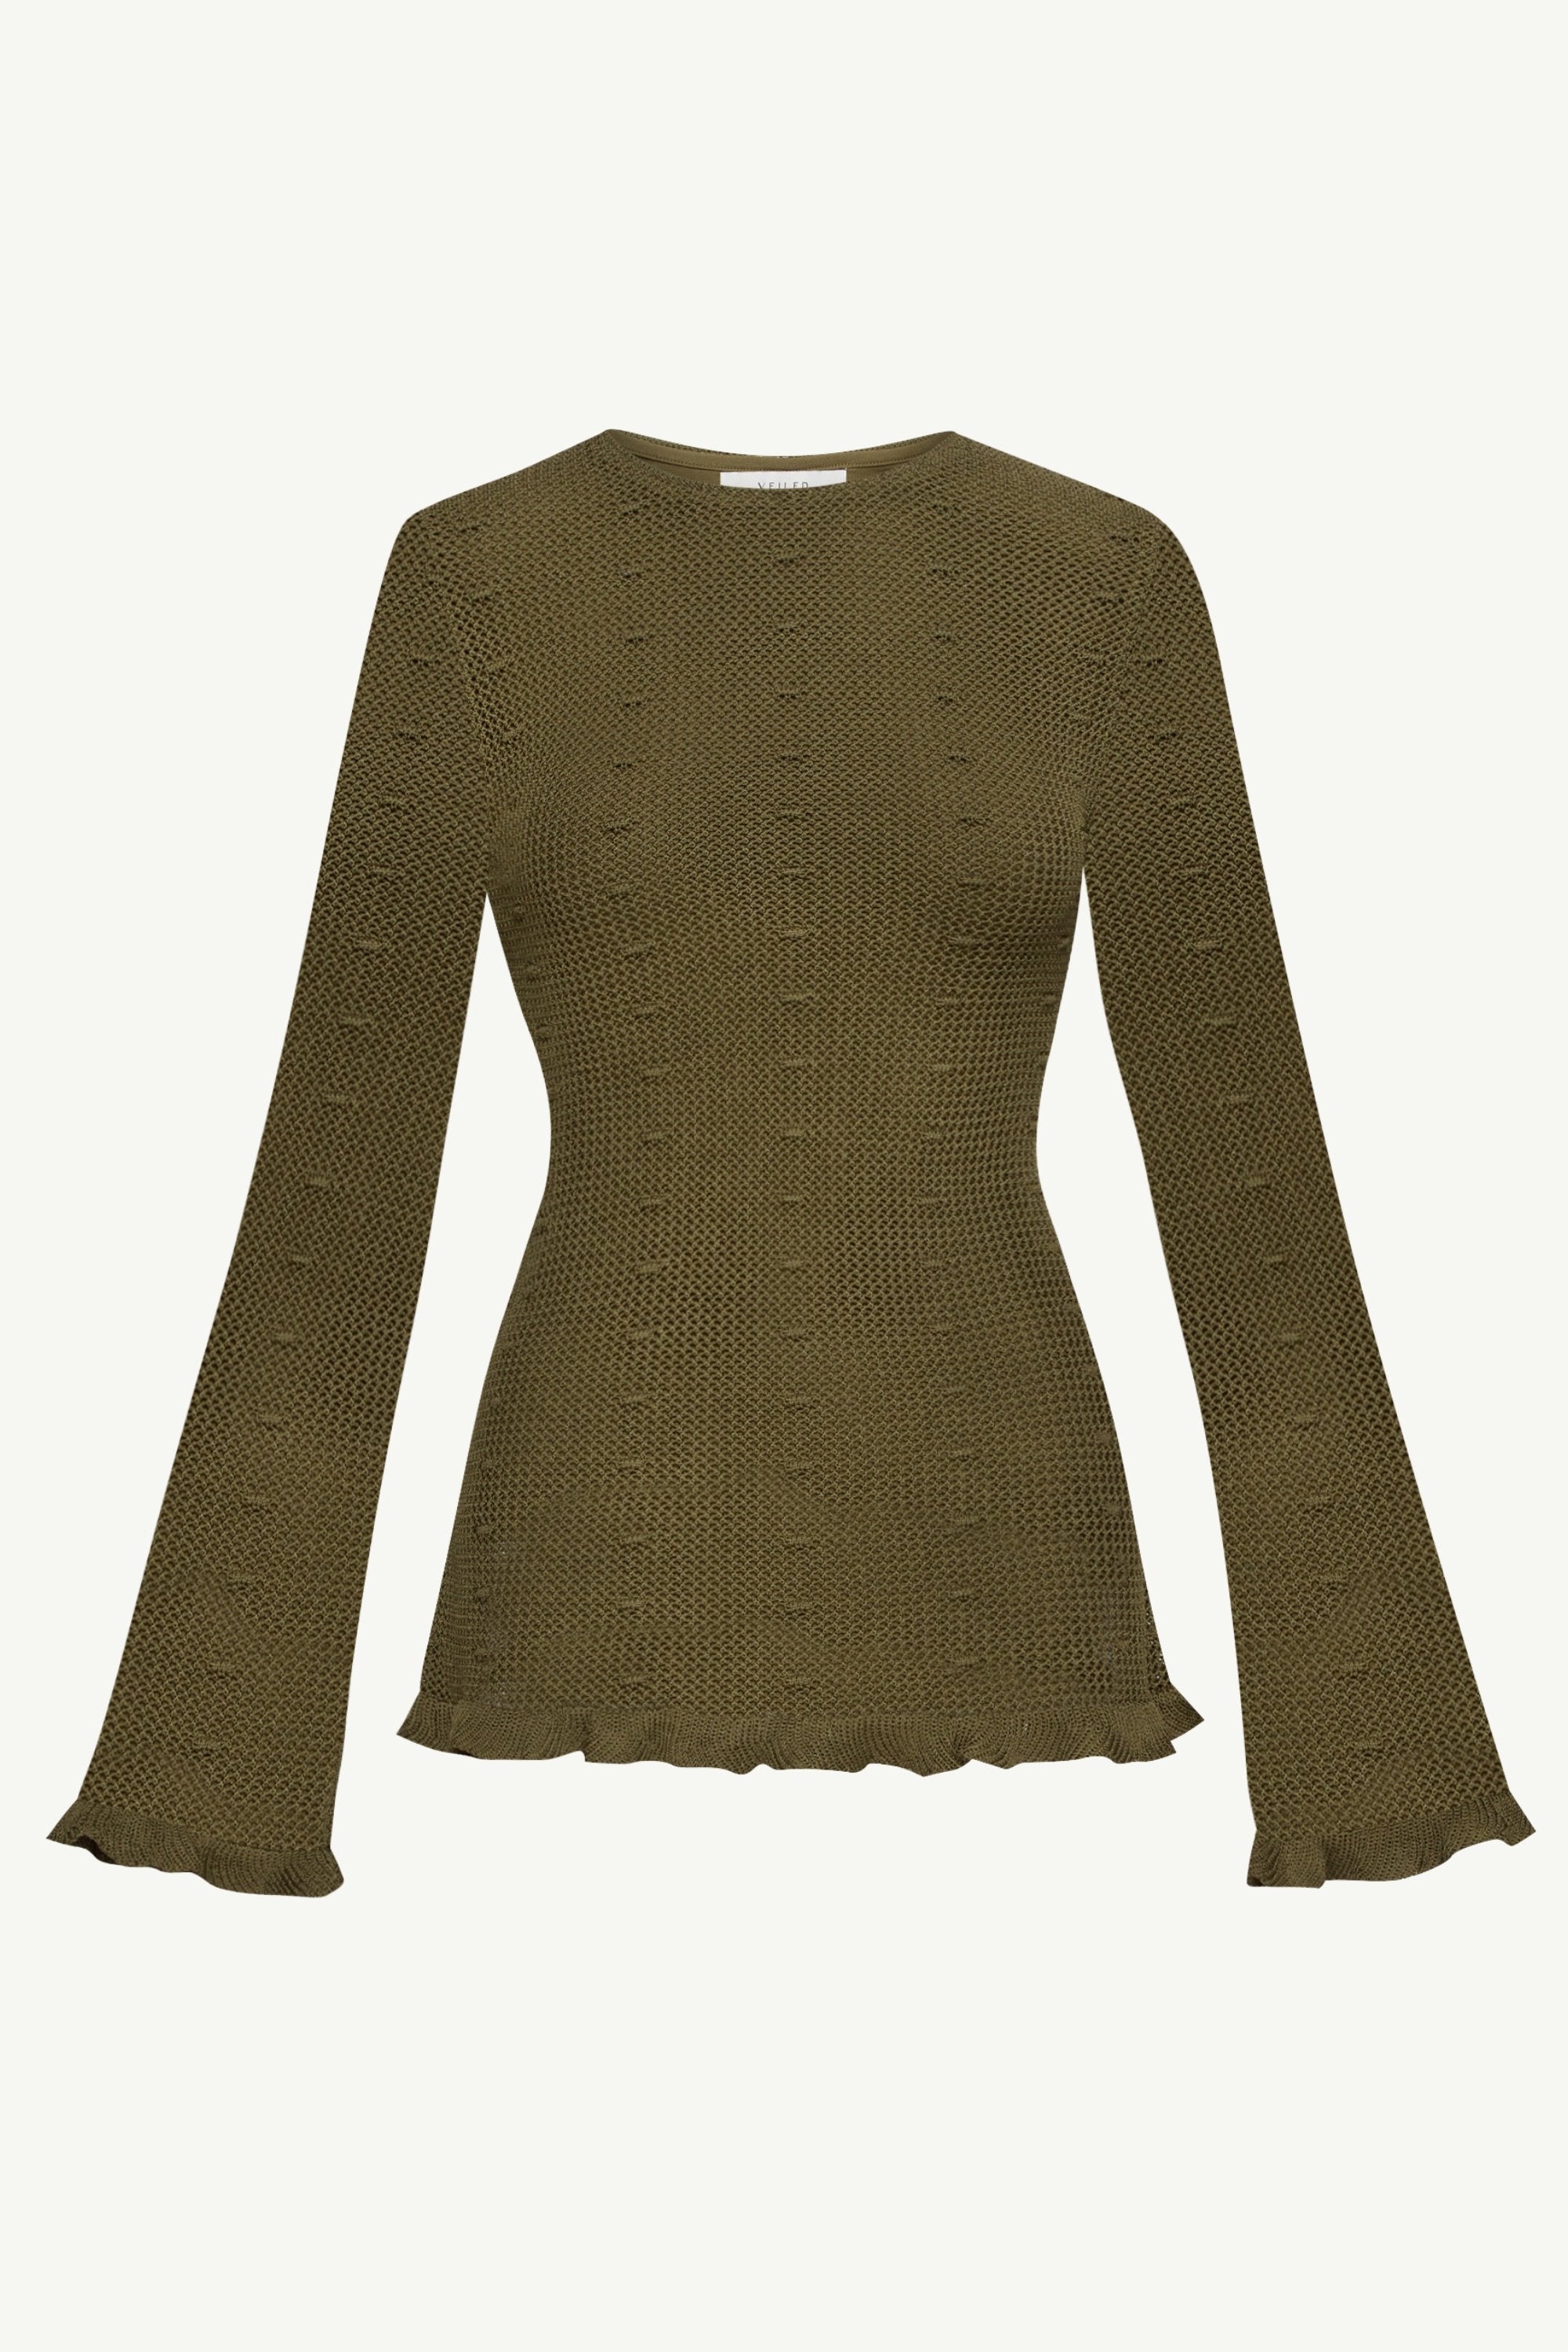 Yara Crochet Top - Dark Olive Clothing Veiled 